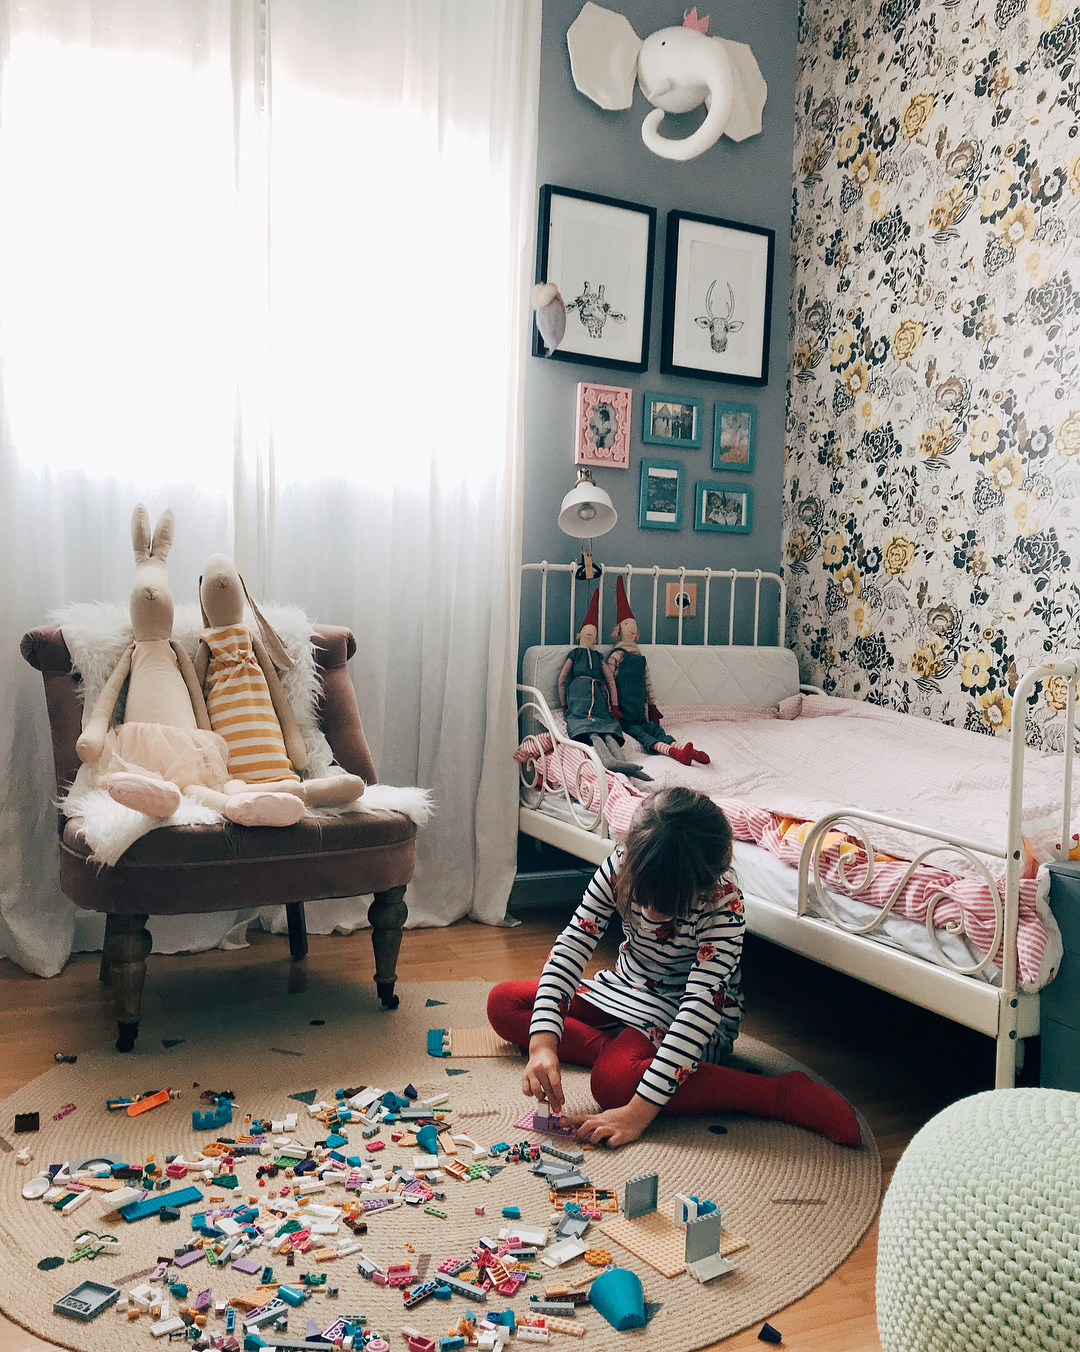 Child Playing on the Floor of Neat Bedroom. Photo by Instagram user @nastia_tsvetaeva